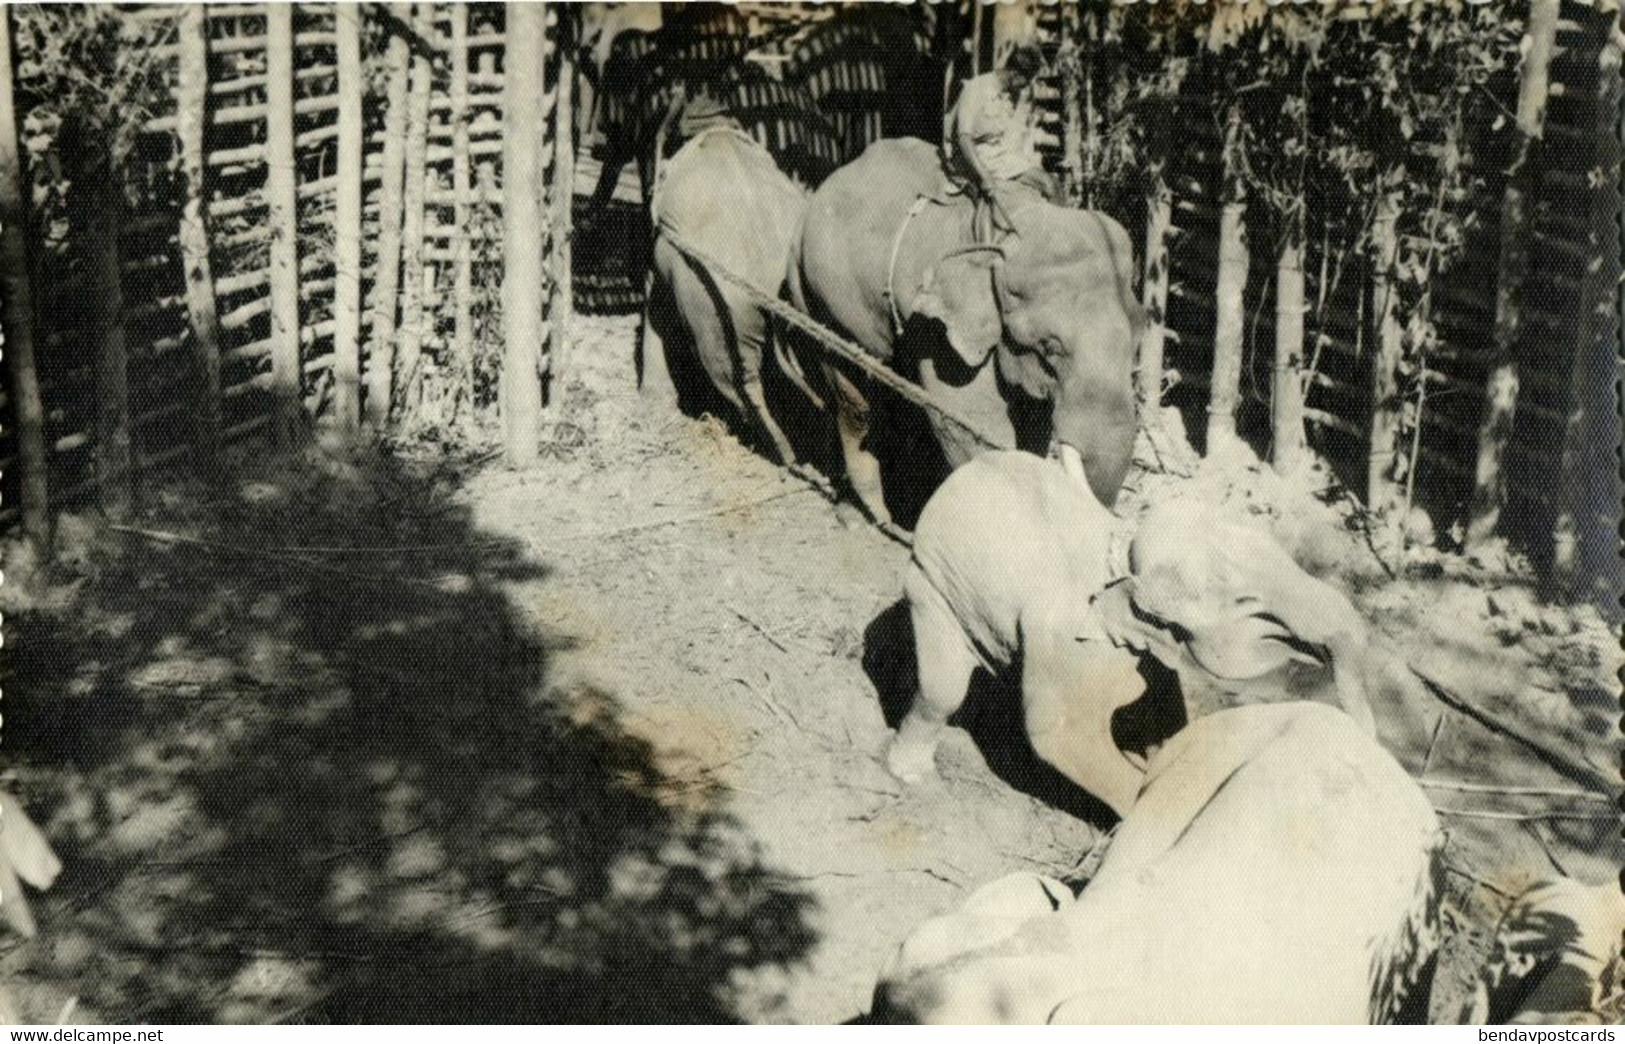 East Pakistan, BANGLADESH, Elephant Khedda, Stockade Trap (1963) RPPC Postcard 2 - Bangladesh